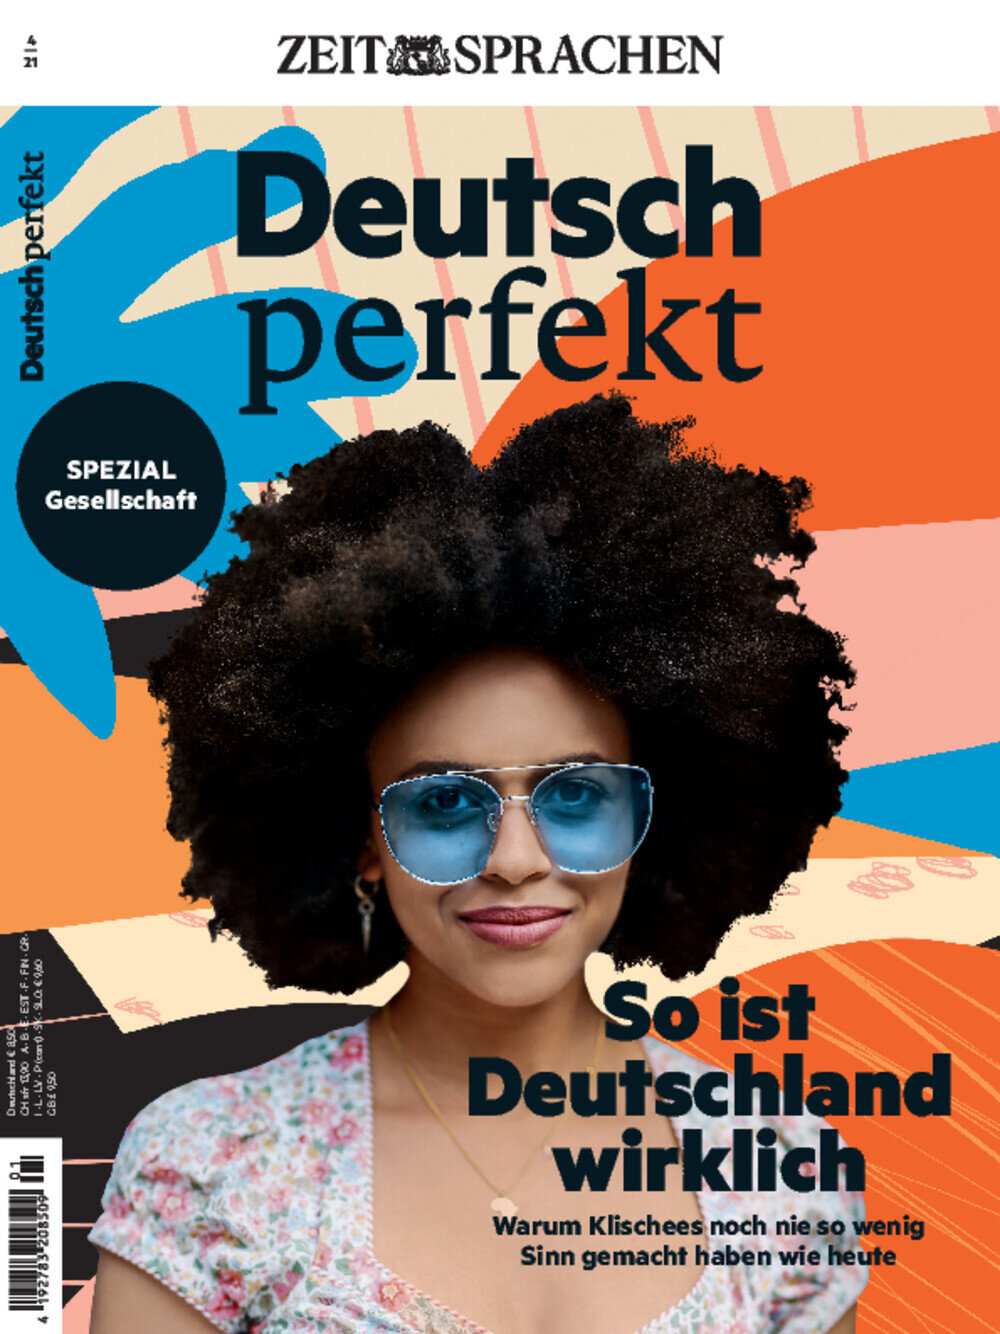 Deutsch perfekt ePaper 04/2021